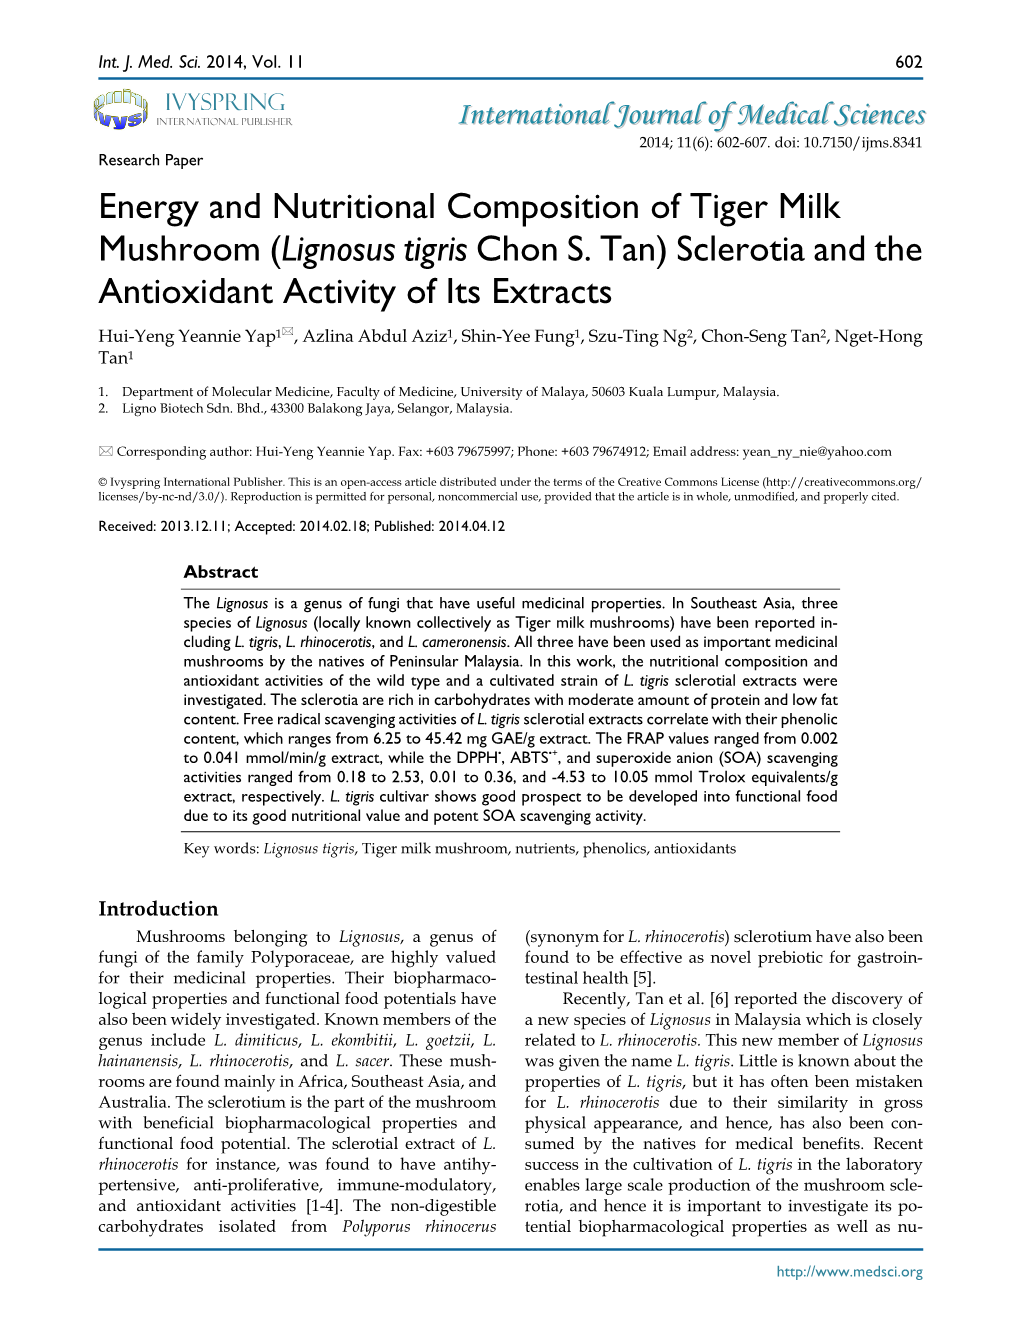 Energy and Nutritional Composition of Tiger Milk Mushroom (Lignosus Tigris Chon S